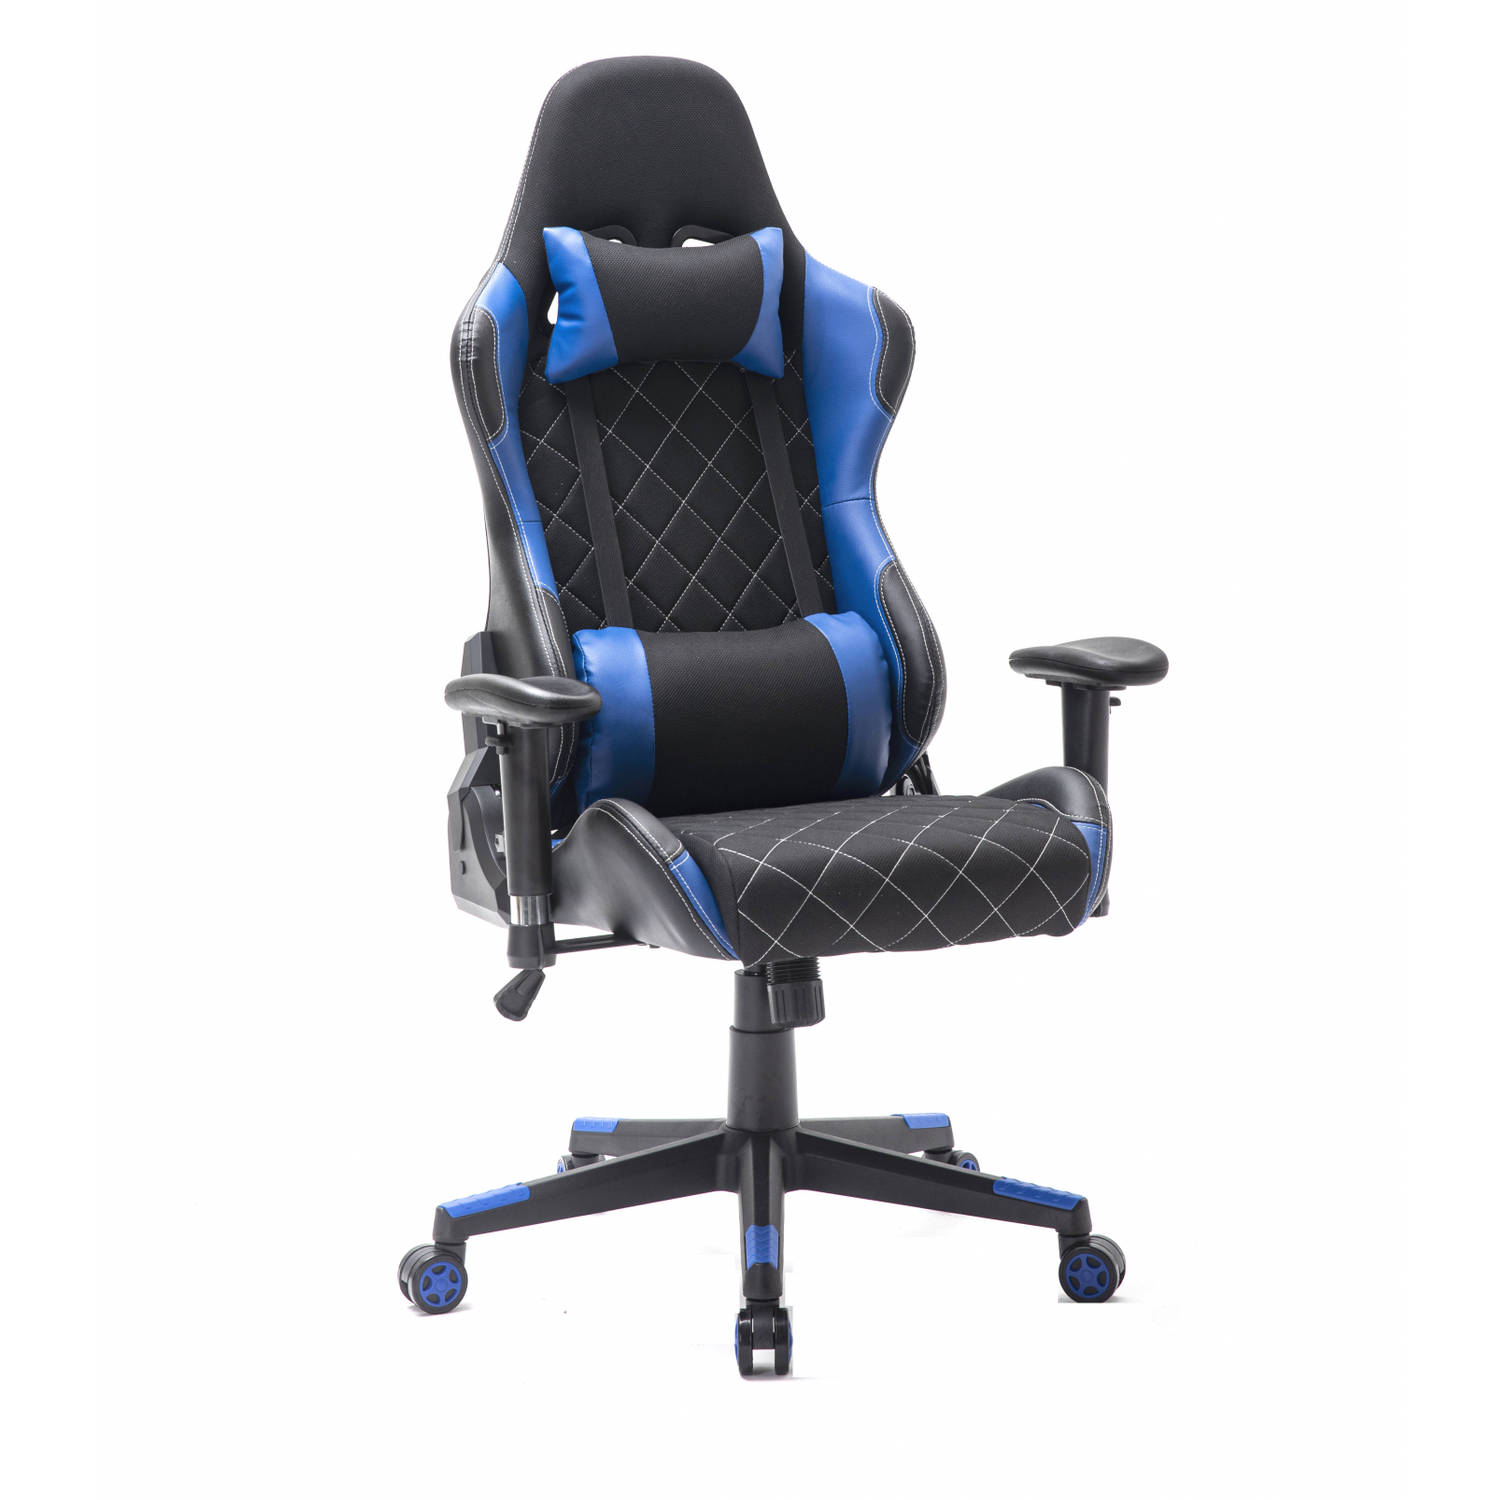 VDD Gamestoel Classic - Bureaustoel tof Bekleding - Zwart Blauw